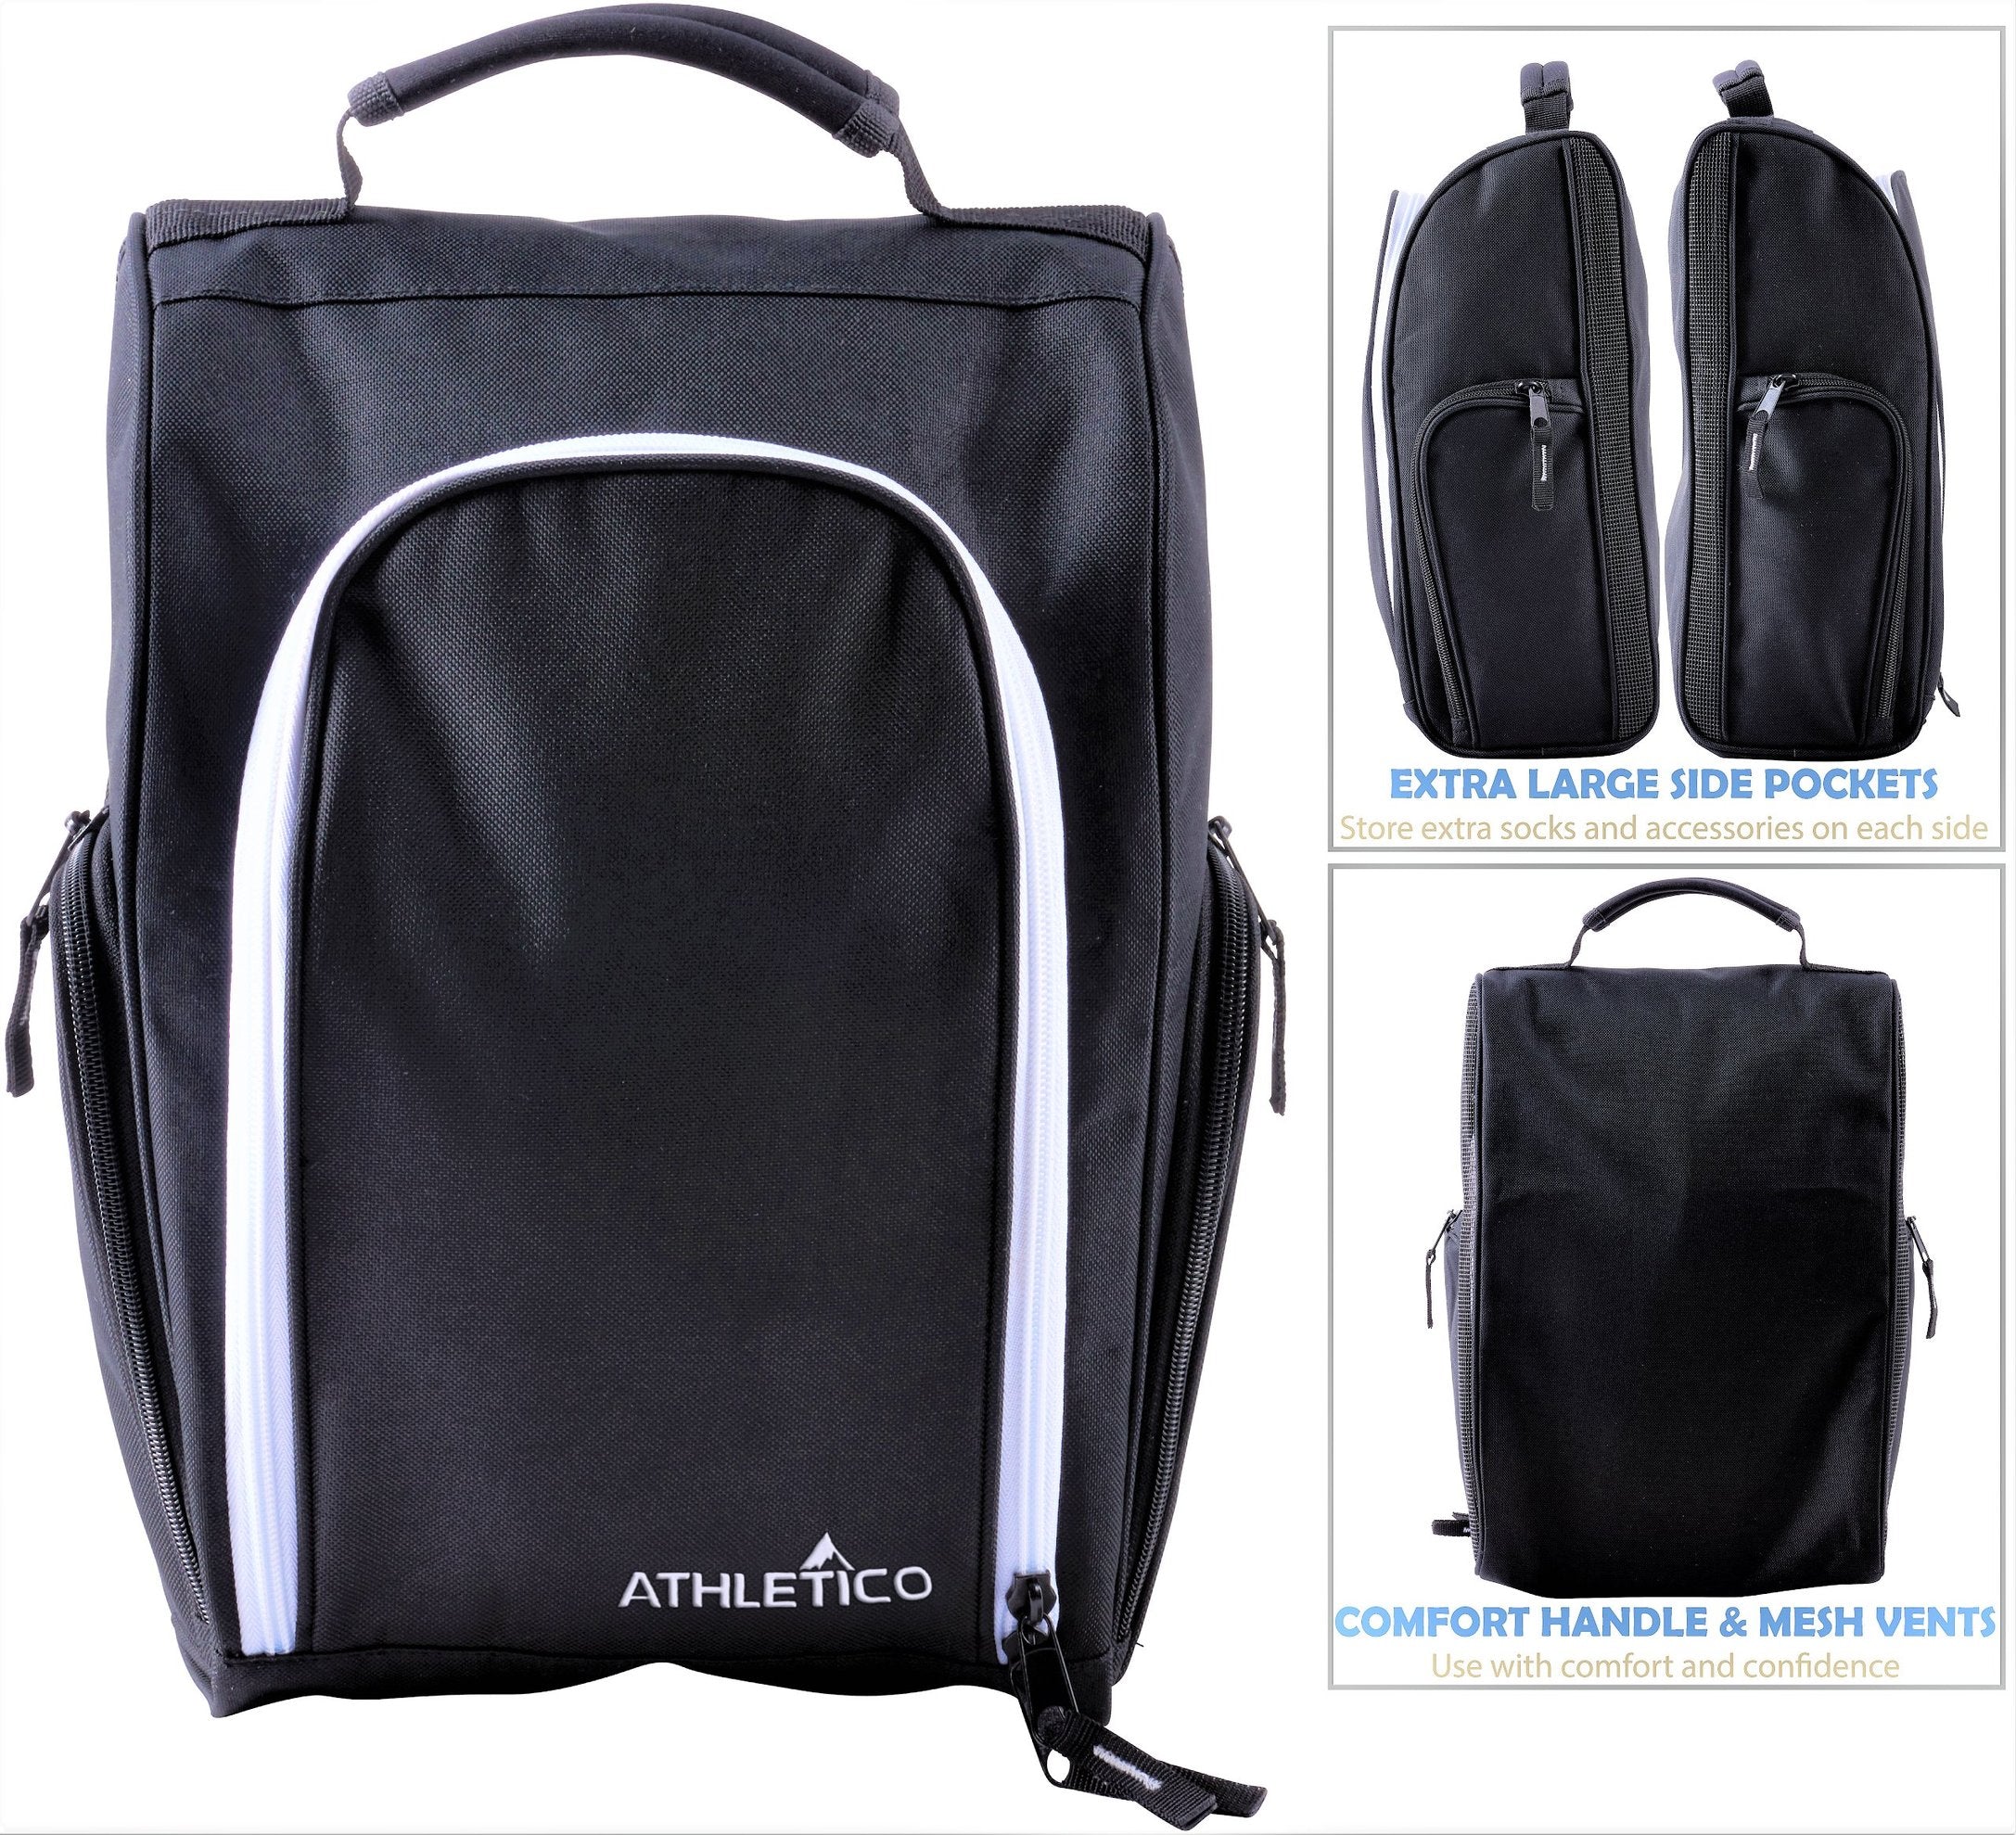 Athletico Golf Shoe Bag - Zippered Shoe Carrier Bags With Ventilation & Outside Pocket for Socks, Tees, etc. (Black/Pink)